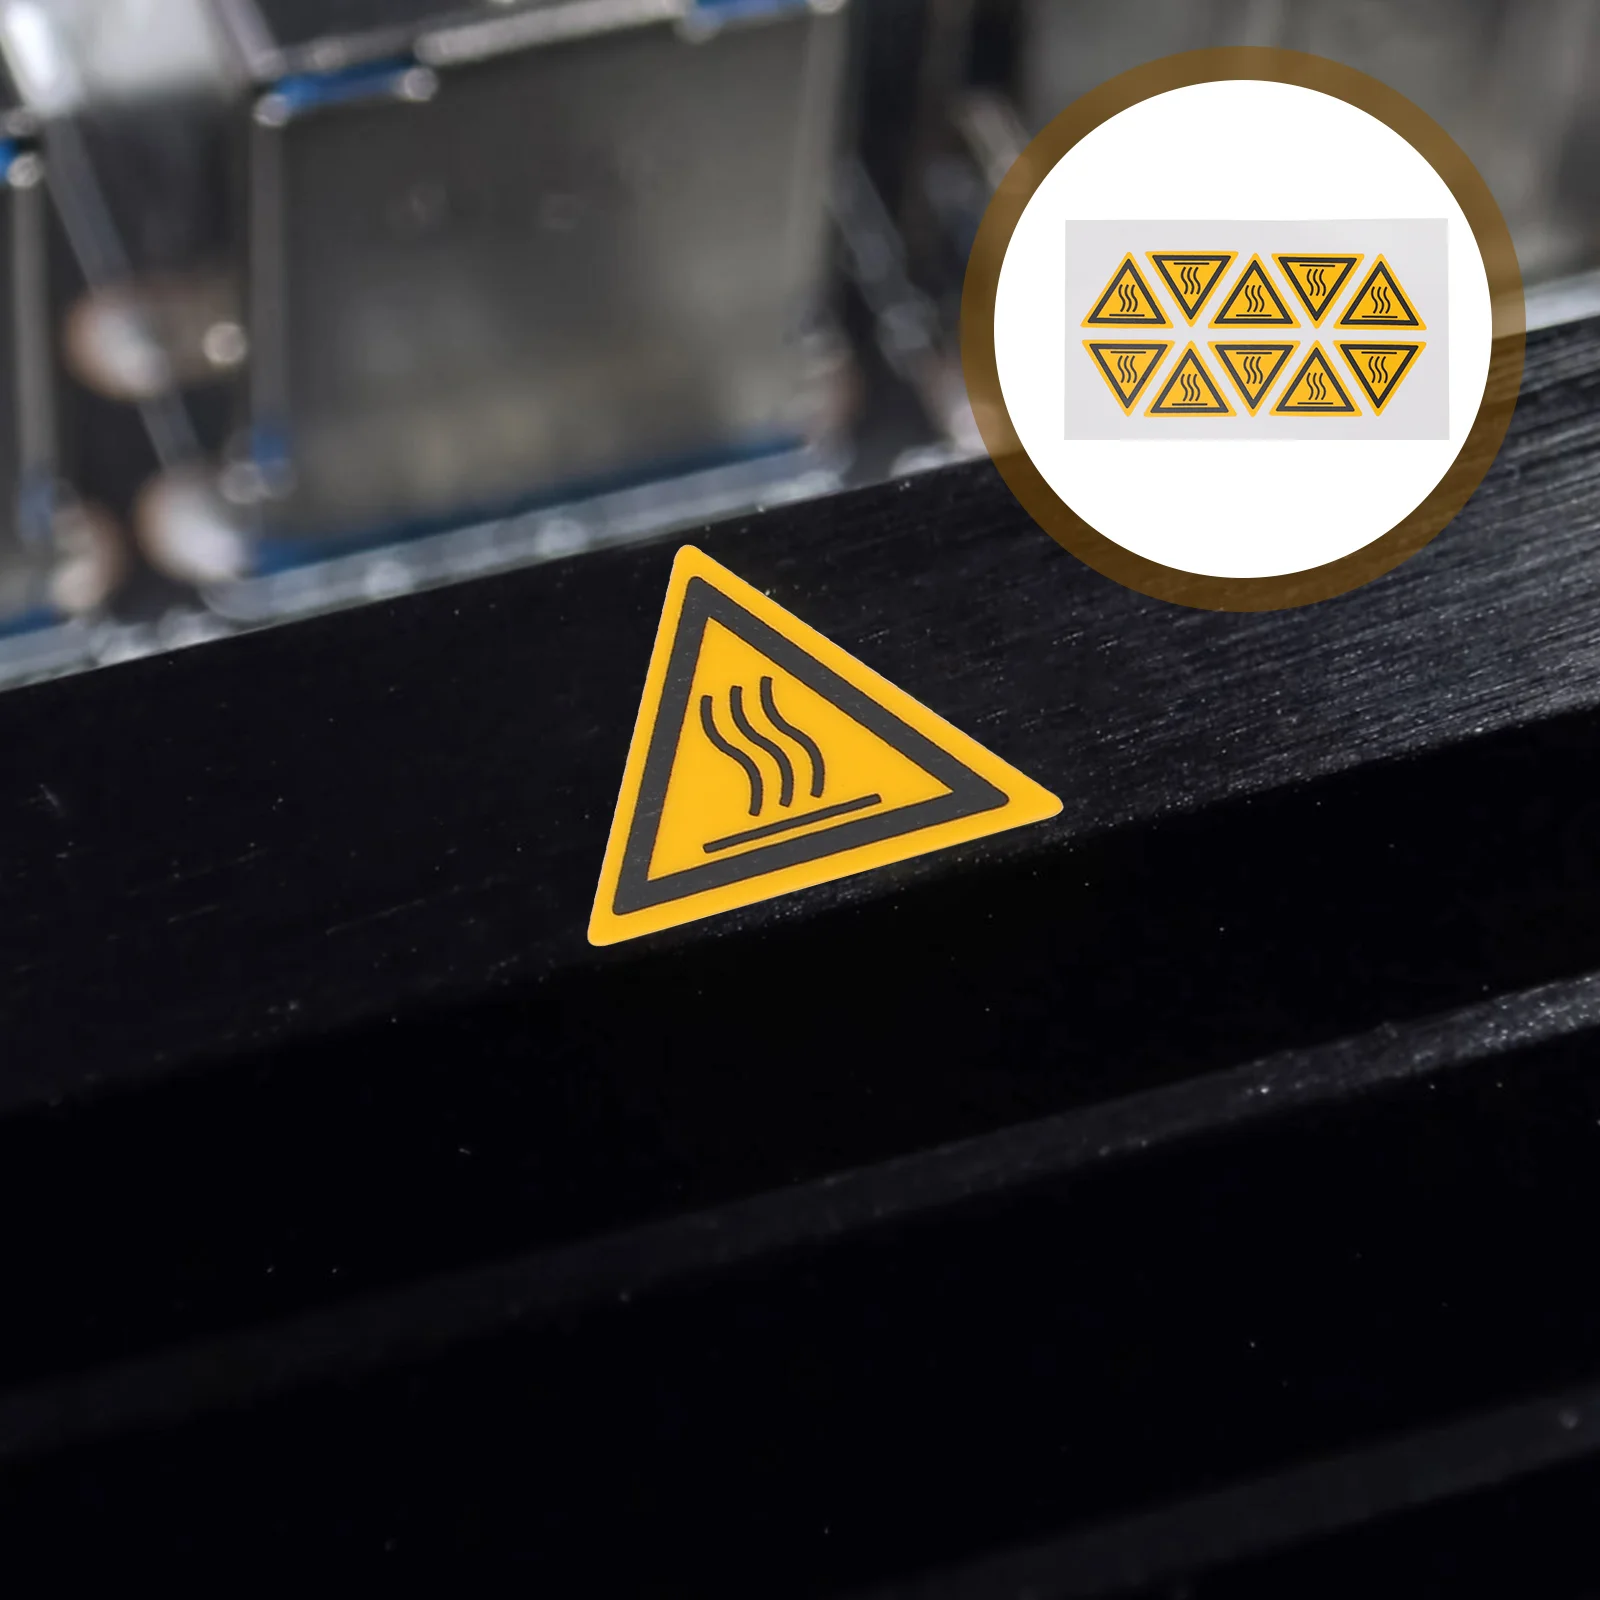 

10pcs Equipment High Temperature Warning Sticker Caution Scald Label Sticker